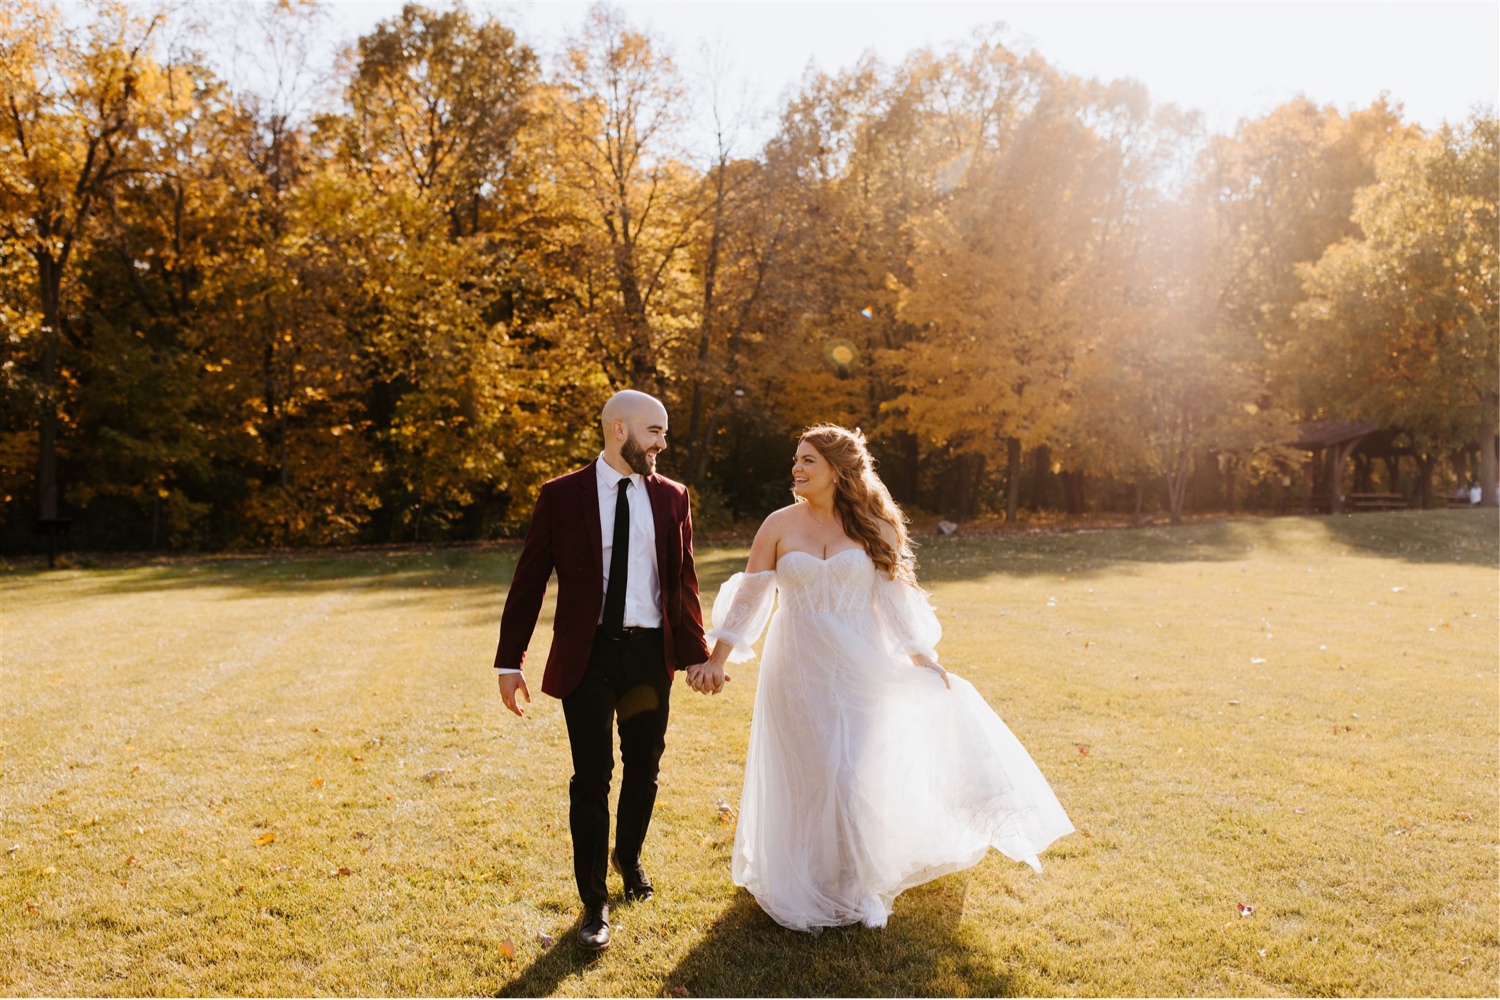 fall destination wedding editorial photography by Hanna Walkowaik